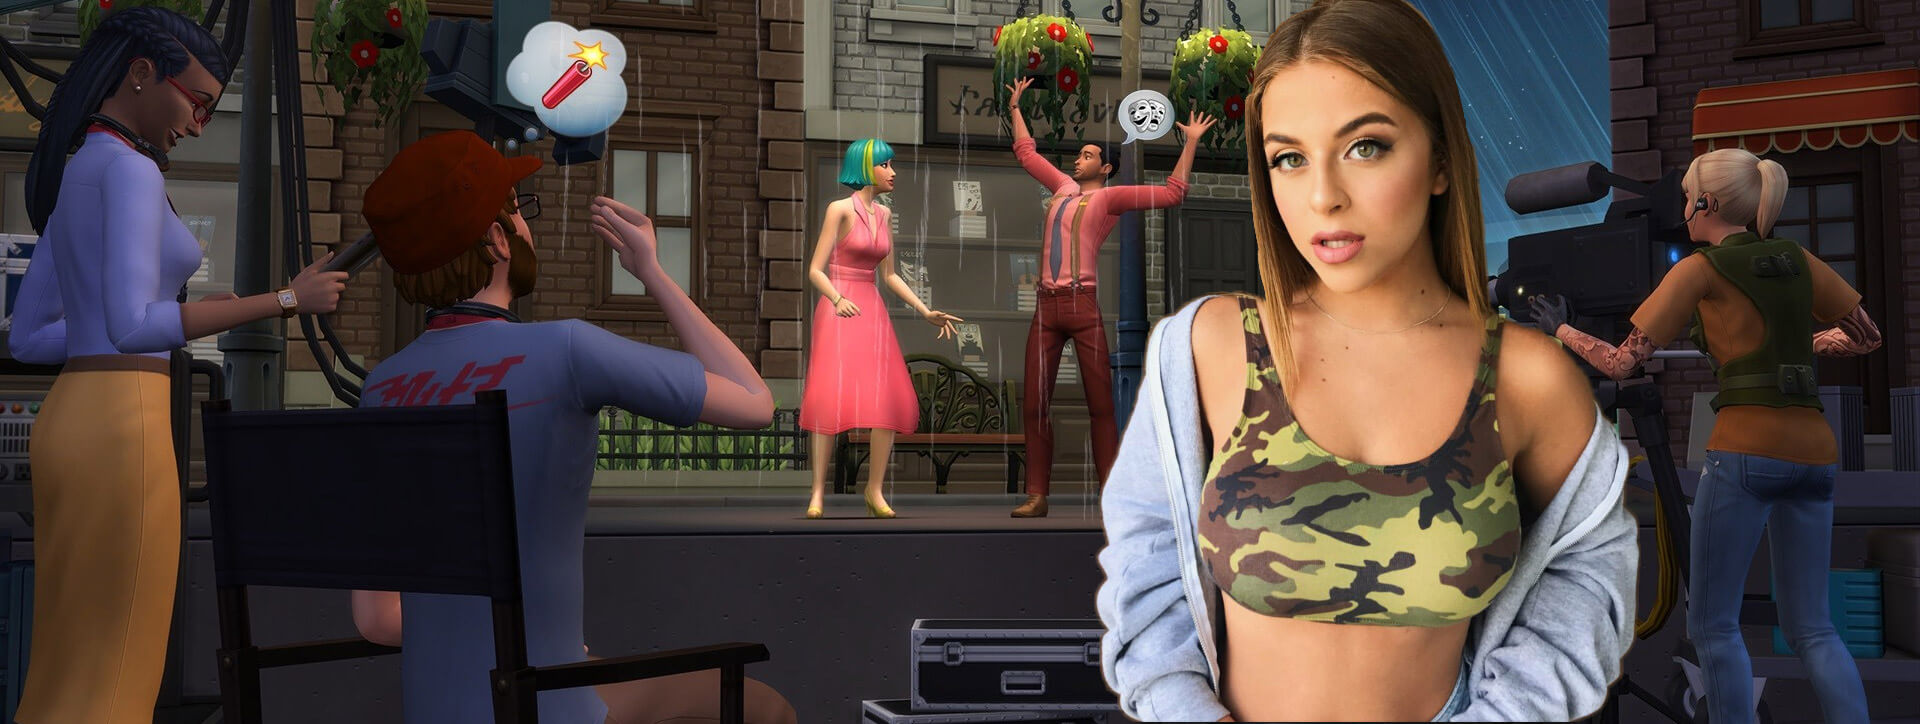 Gameplays do The Sims 4 Rumo à Fama dos Game Changers brasileiros - Alala  Sims